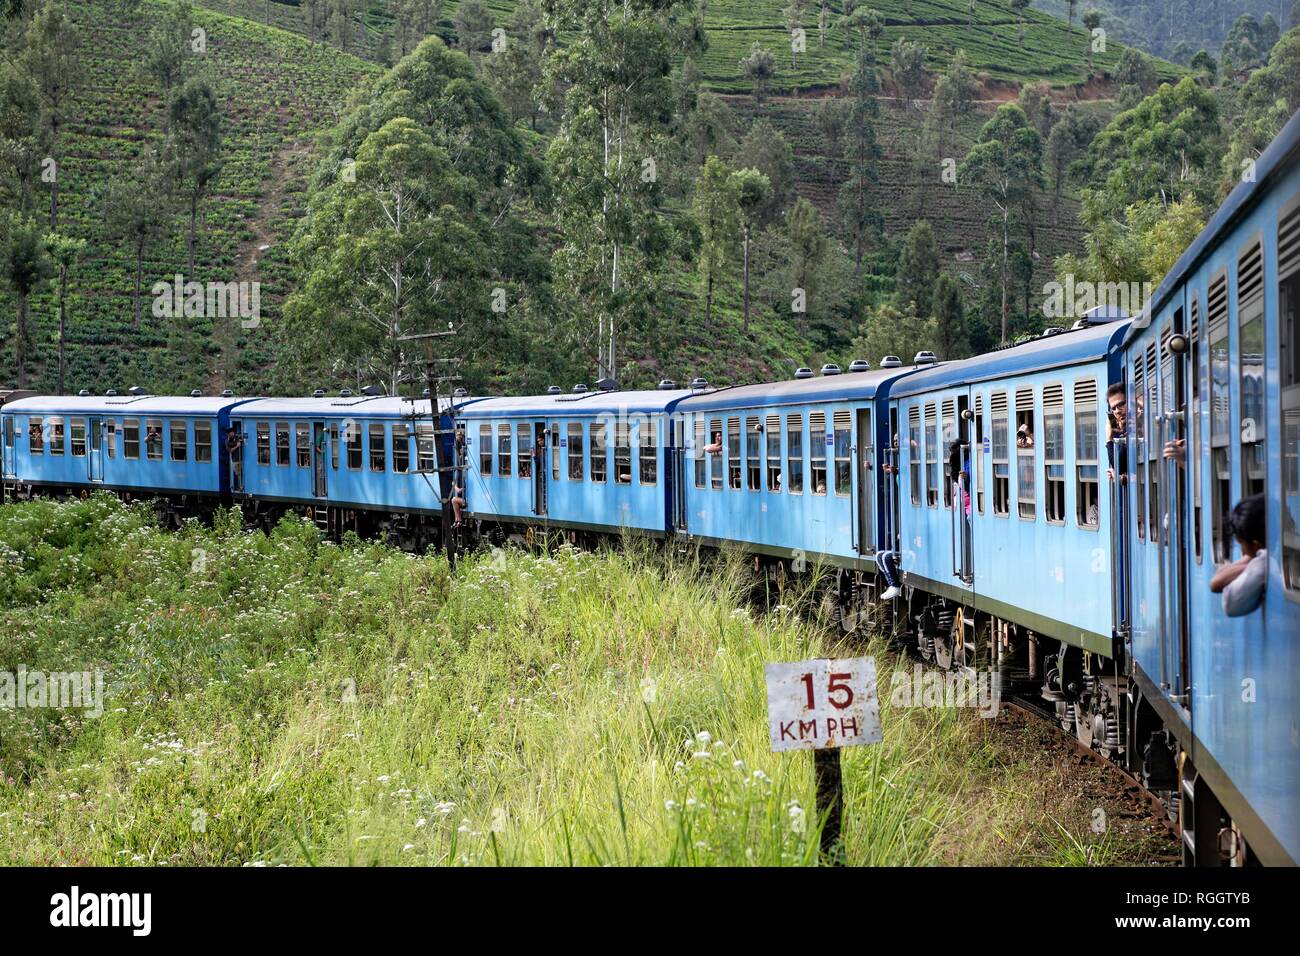 Passenger train from Ella to Nanu Oya, Kahagolla, Sri Lanka Stock Photo